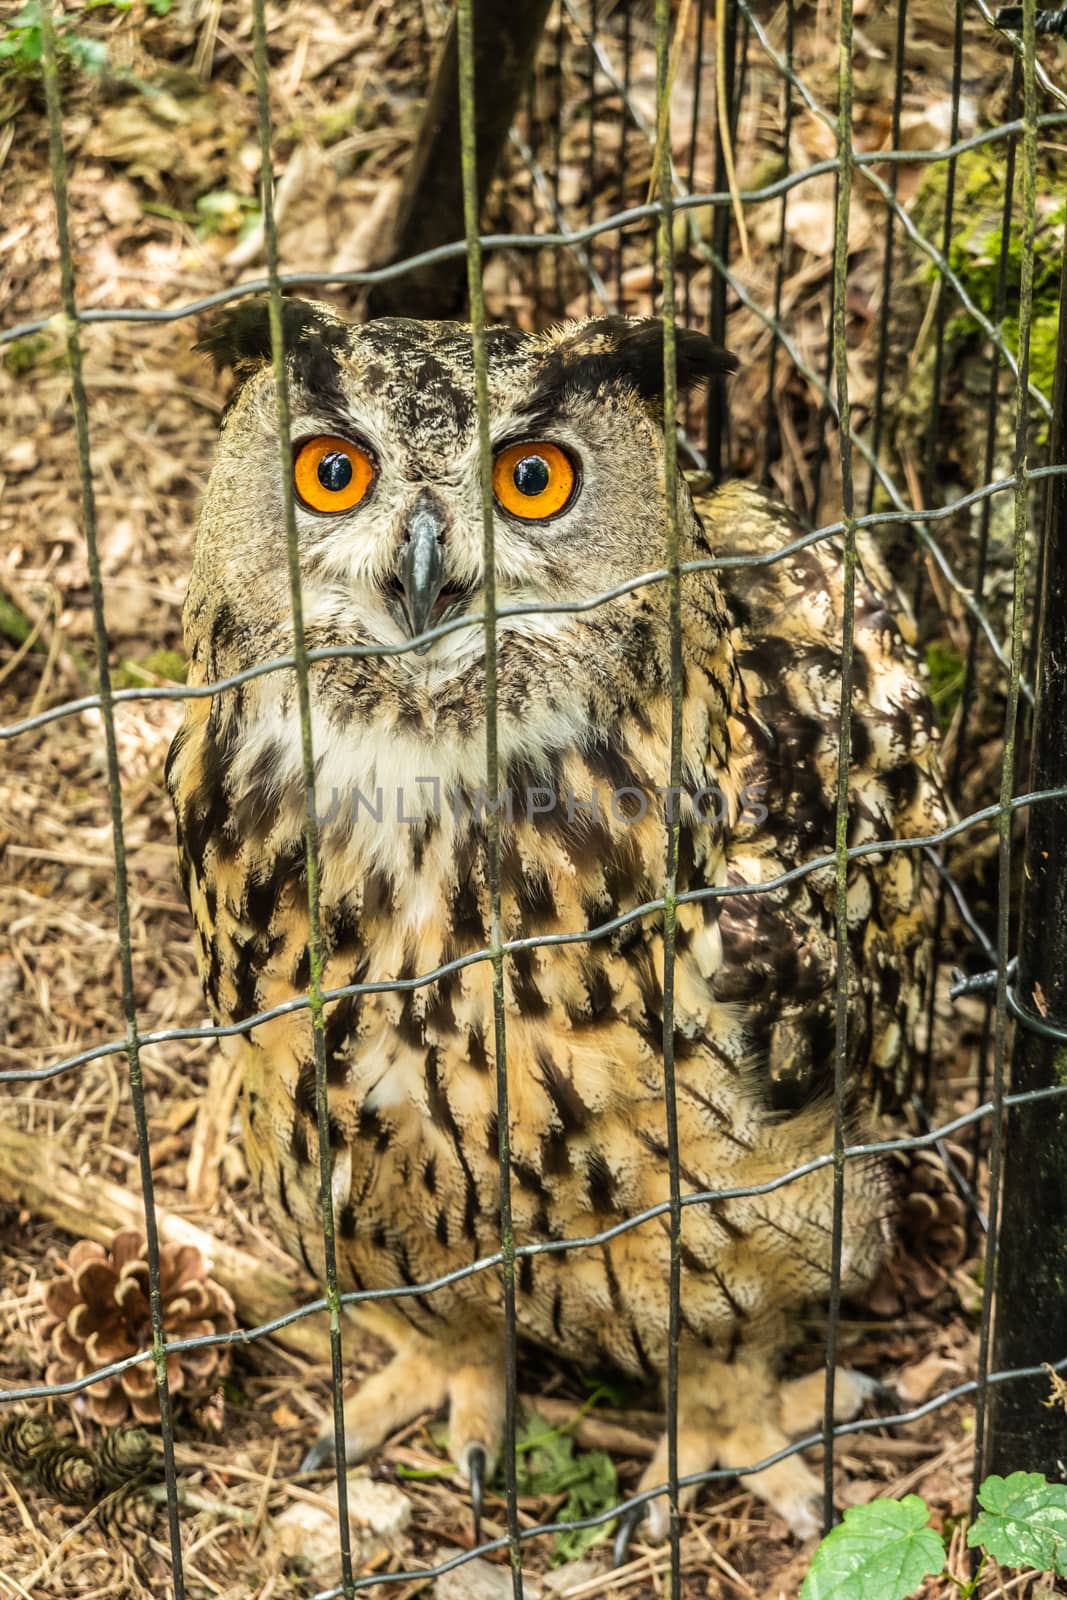 Han-sur-Lesse, Belgium - June 25, 2019: Animal park with Long Eared Owl in captivity in closeup.